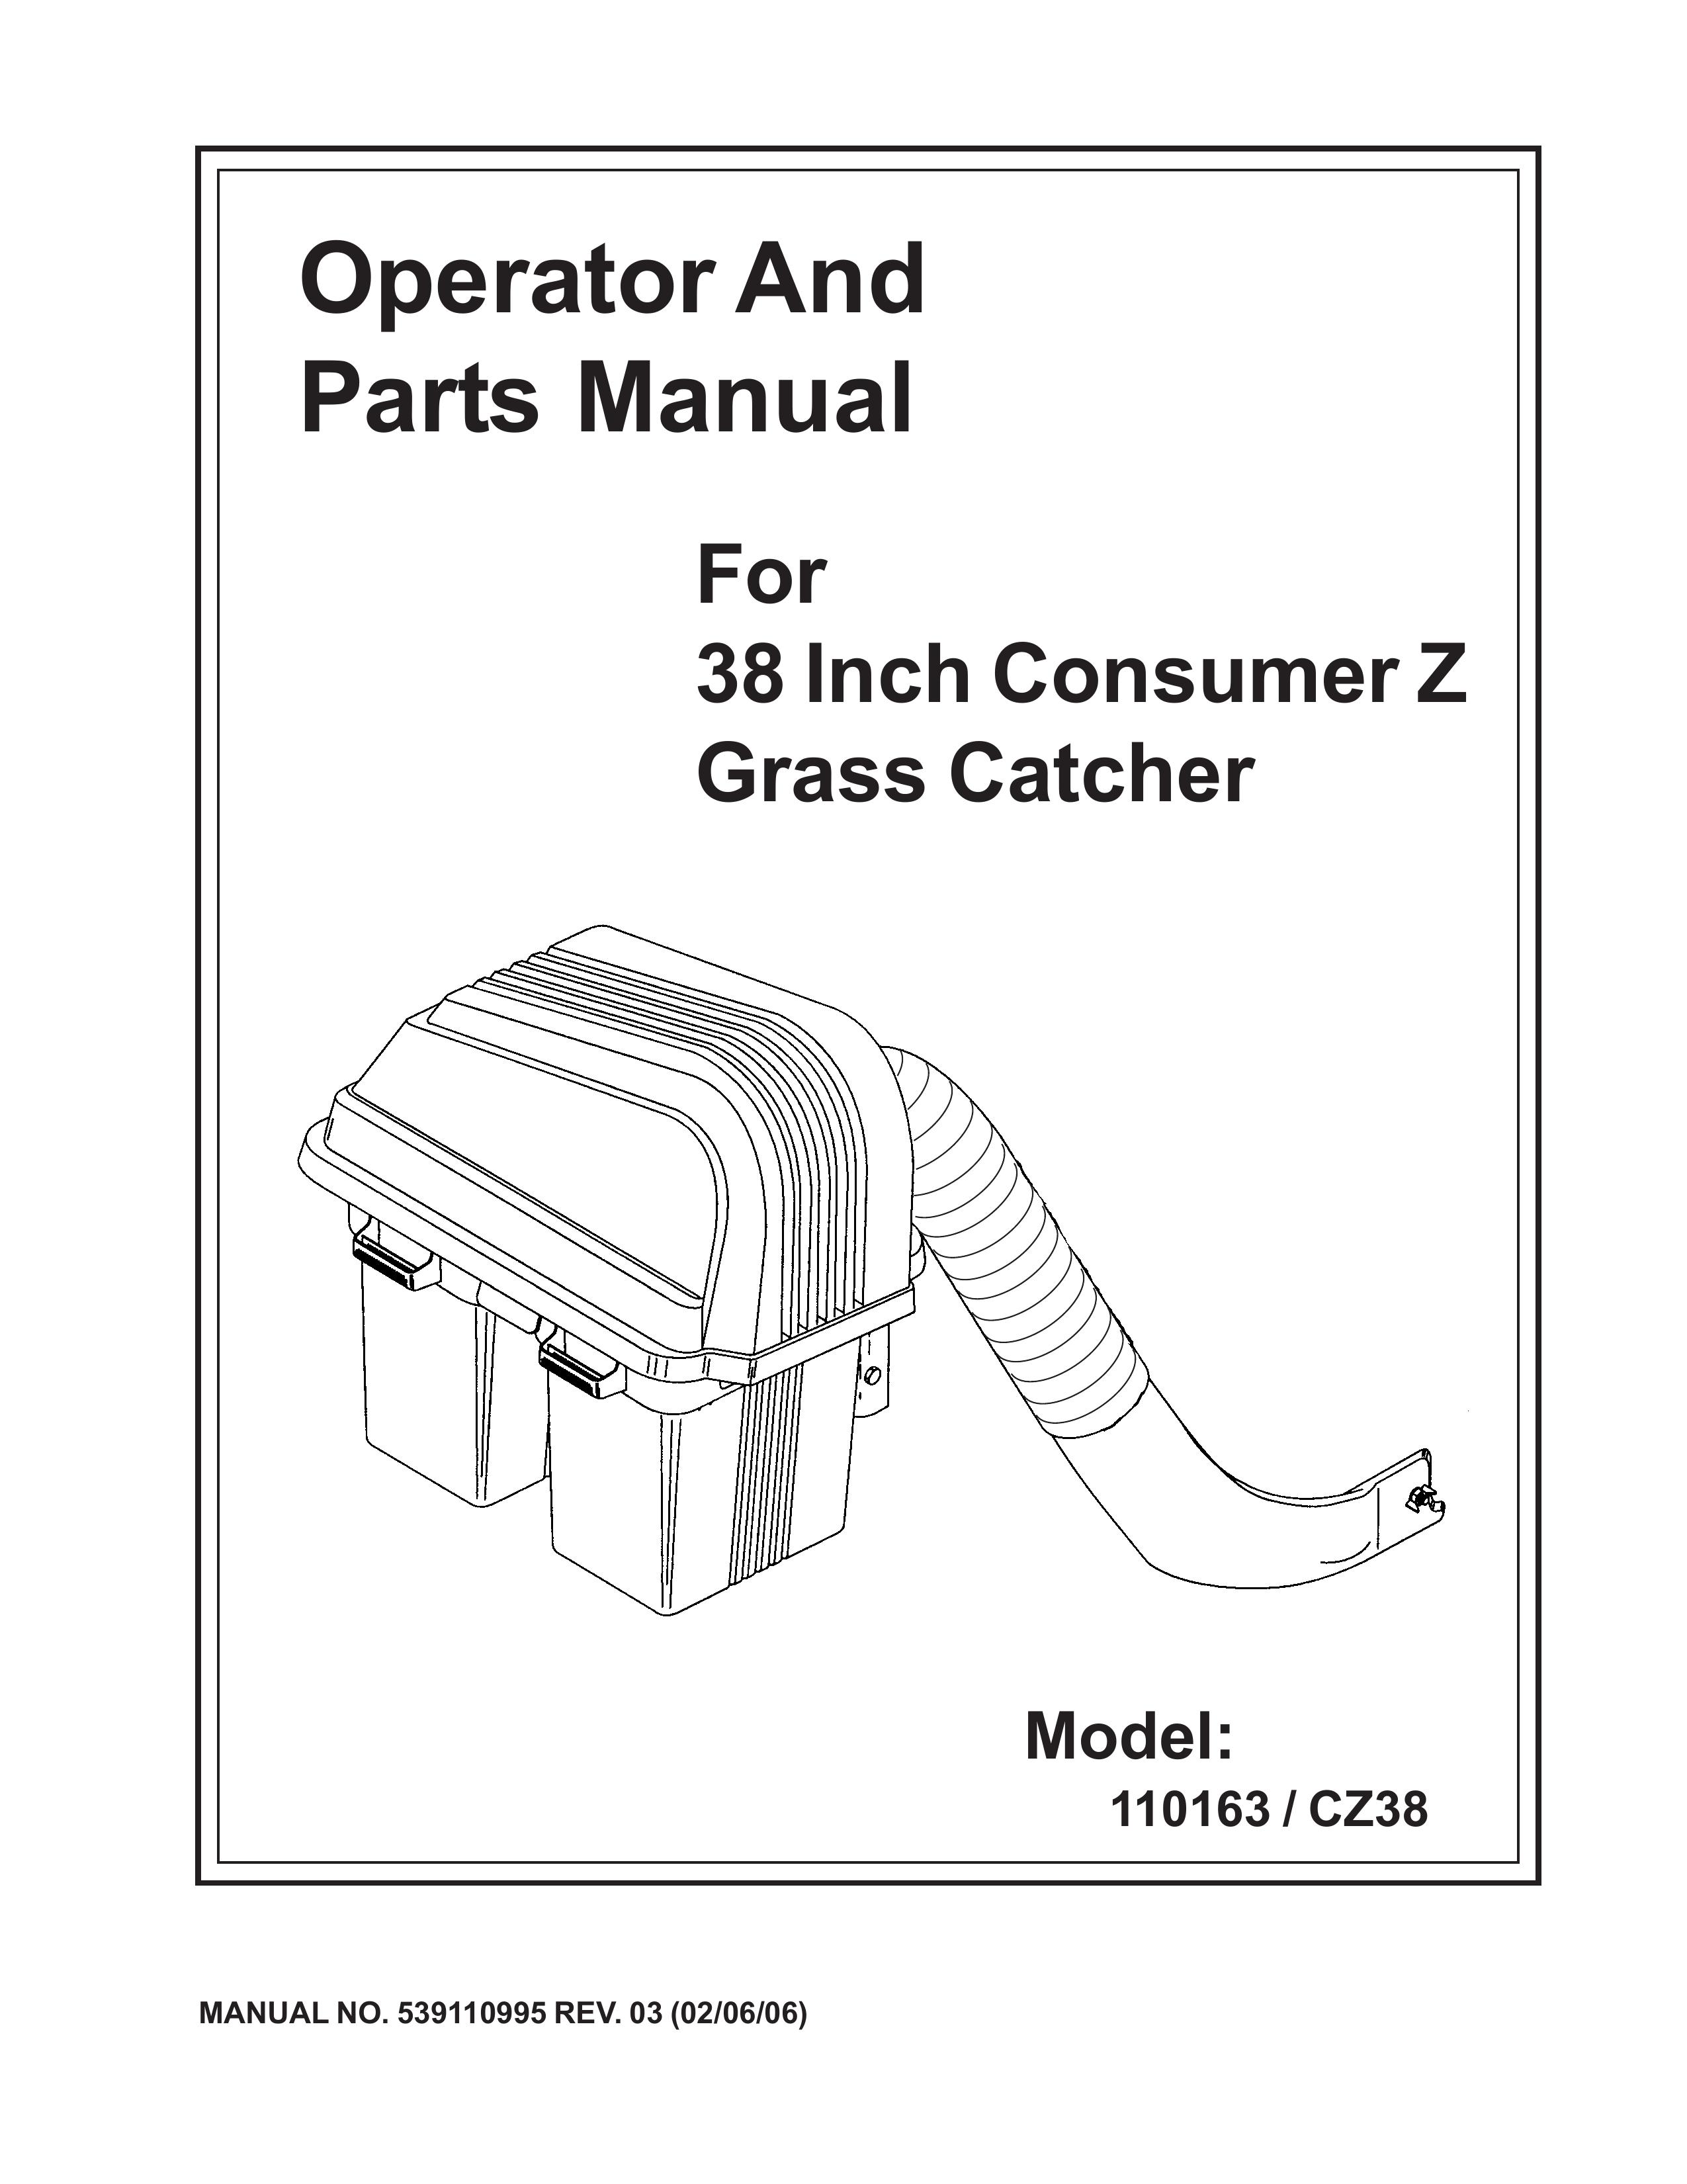 HTC 110163 / CZ38 Lawn Mower Accessory User Manual